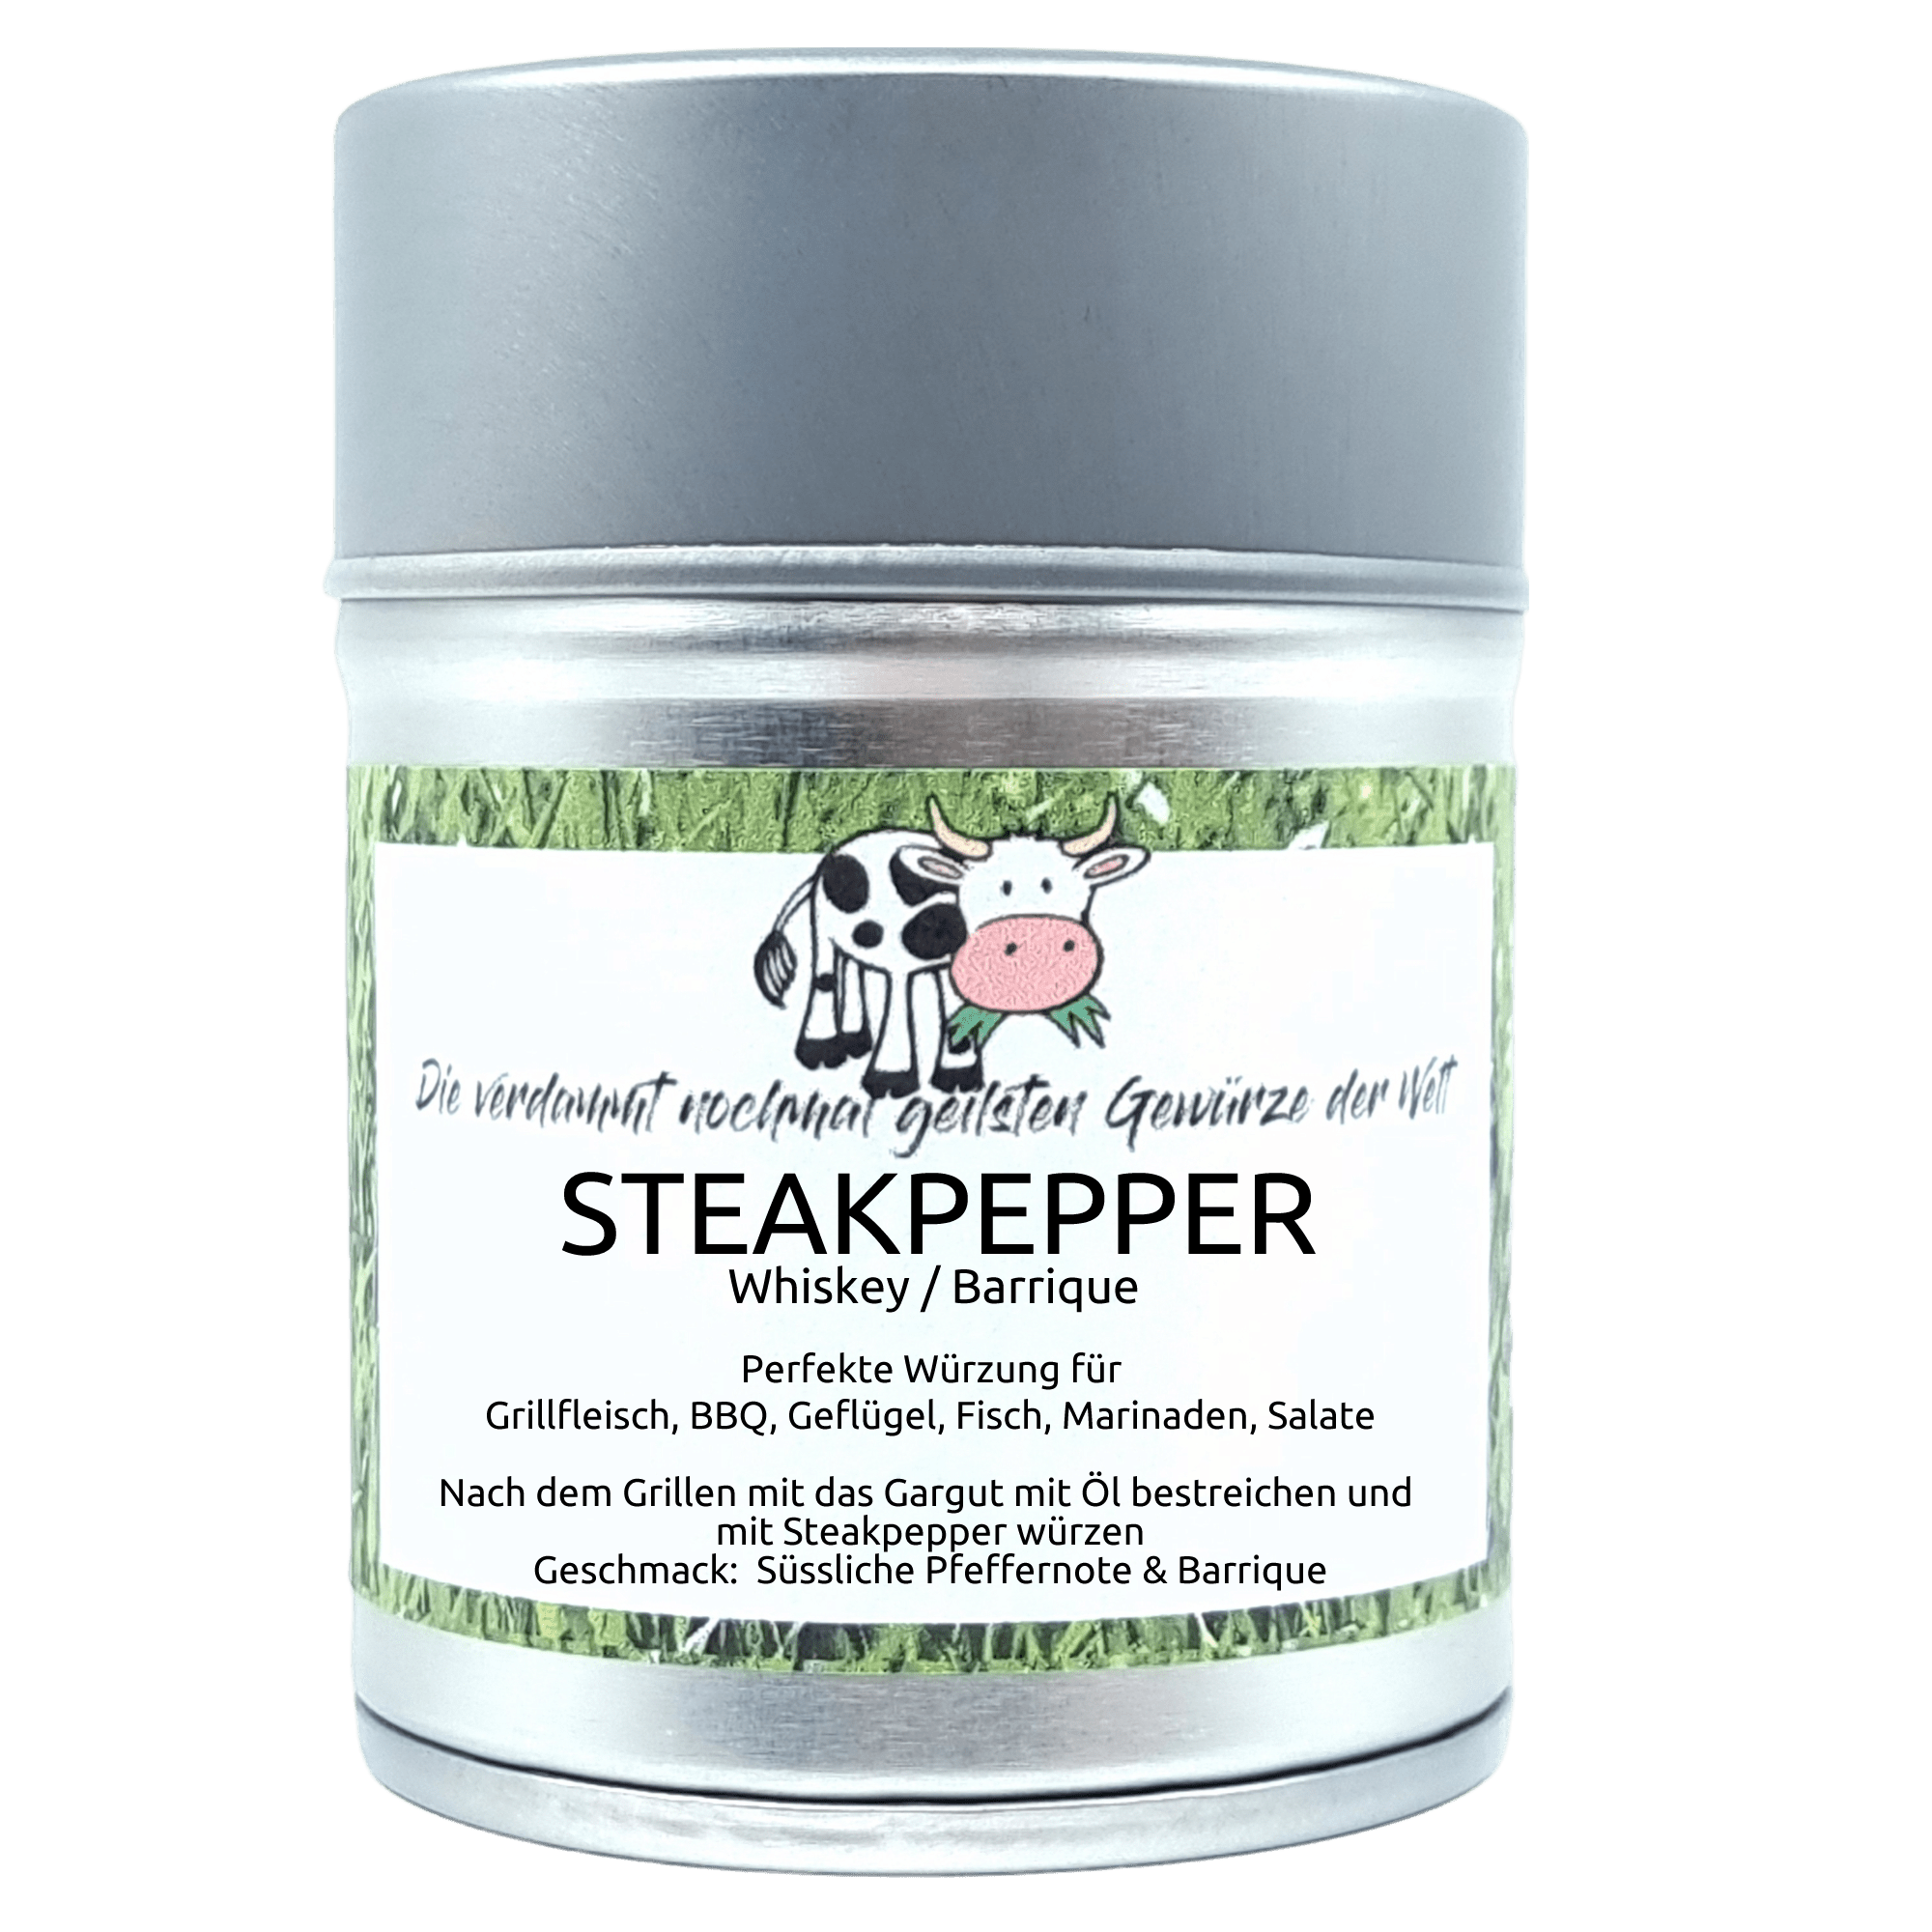 Steakpepper Whiskey / Barrique Gewürzstreuer